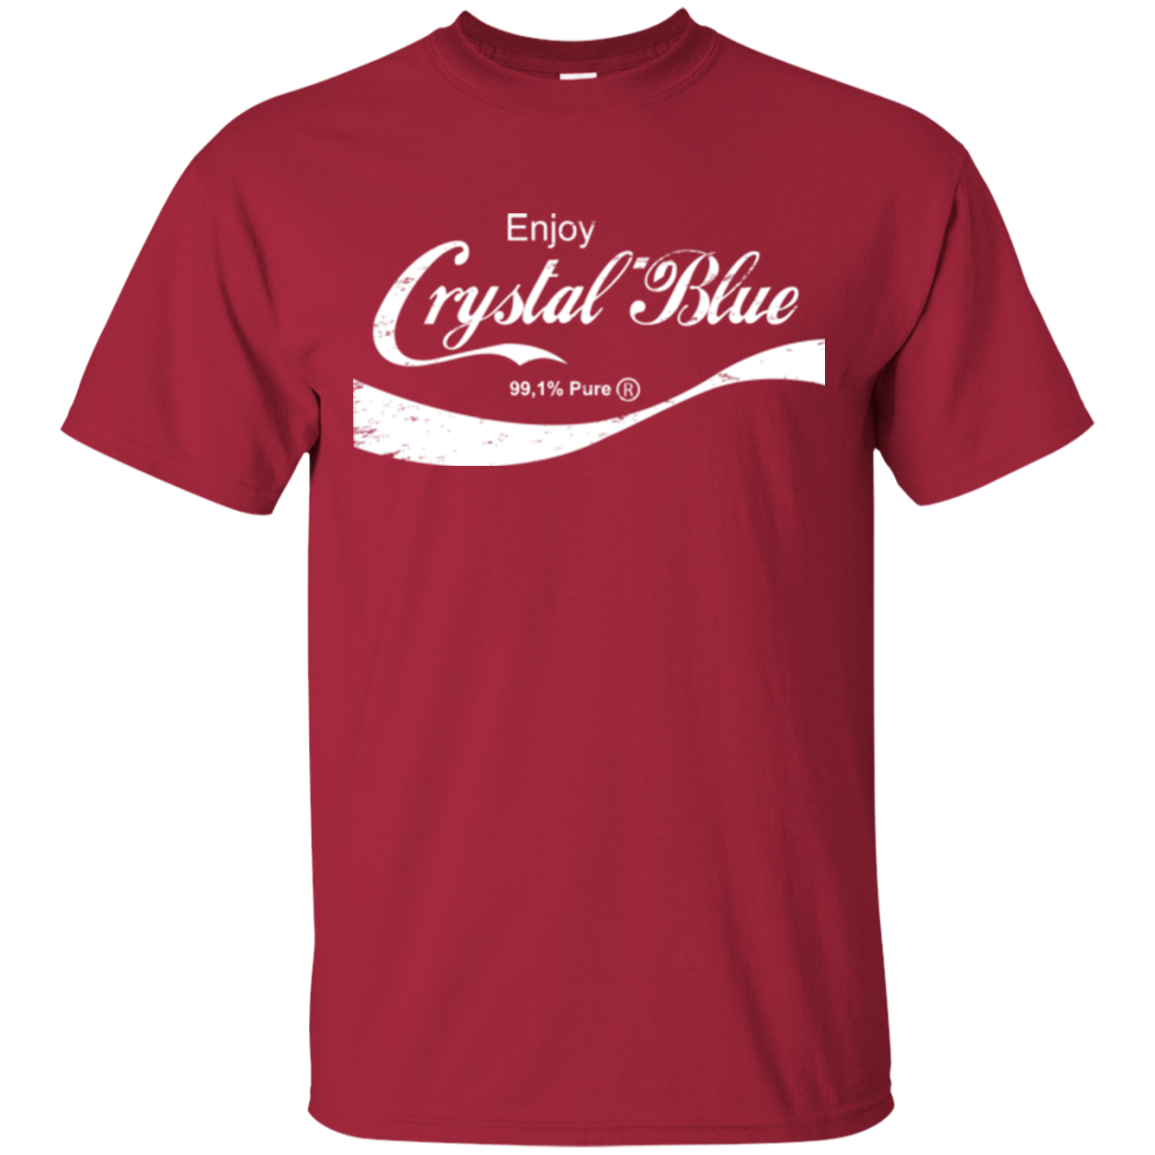 Crystal Blue Coke T-Shirt